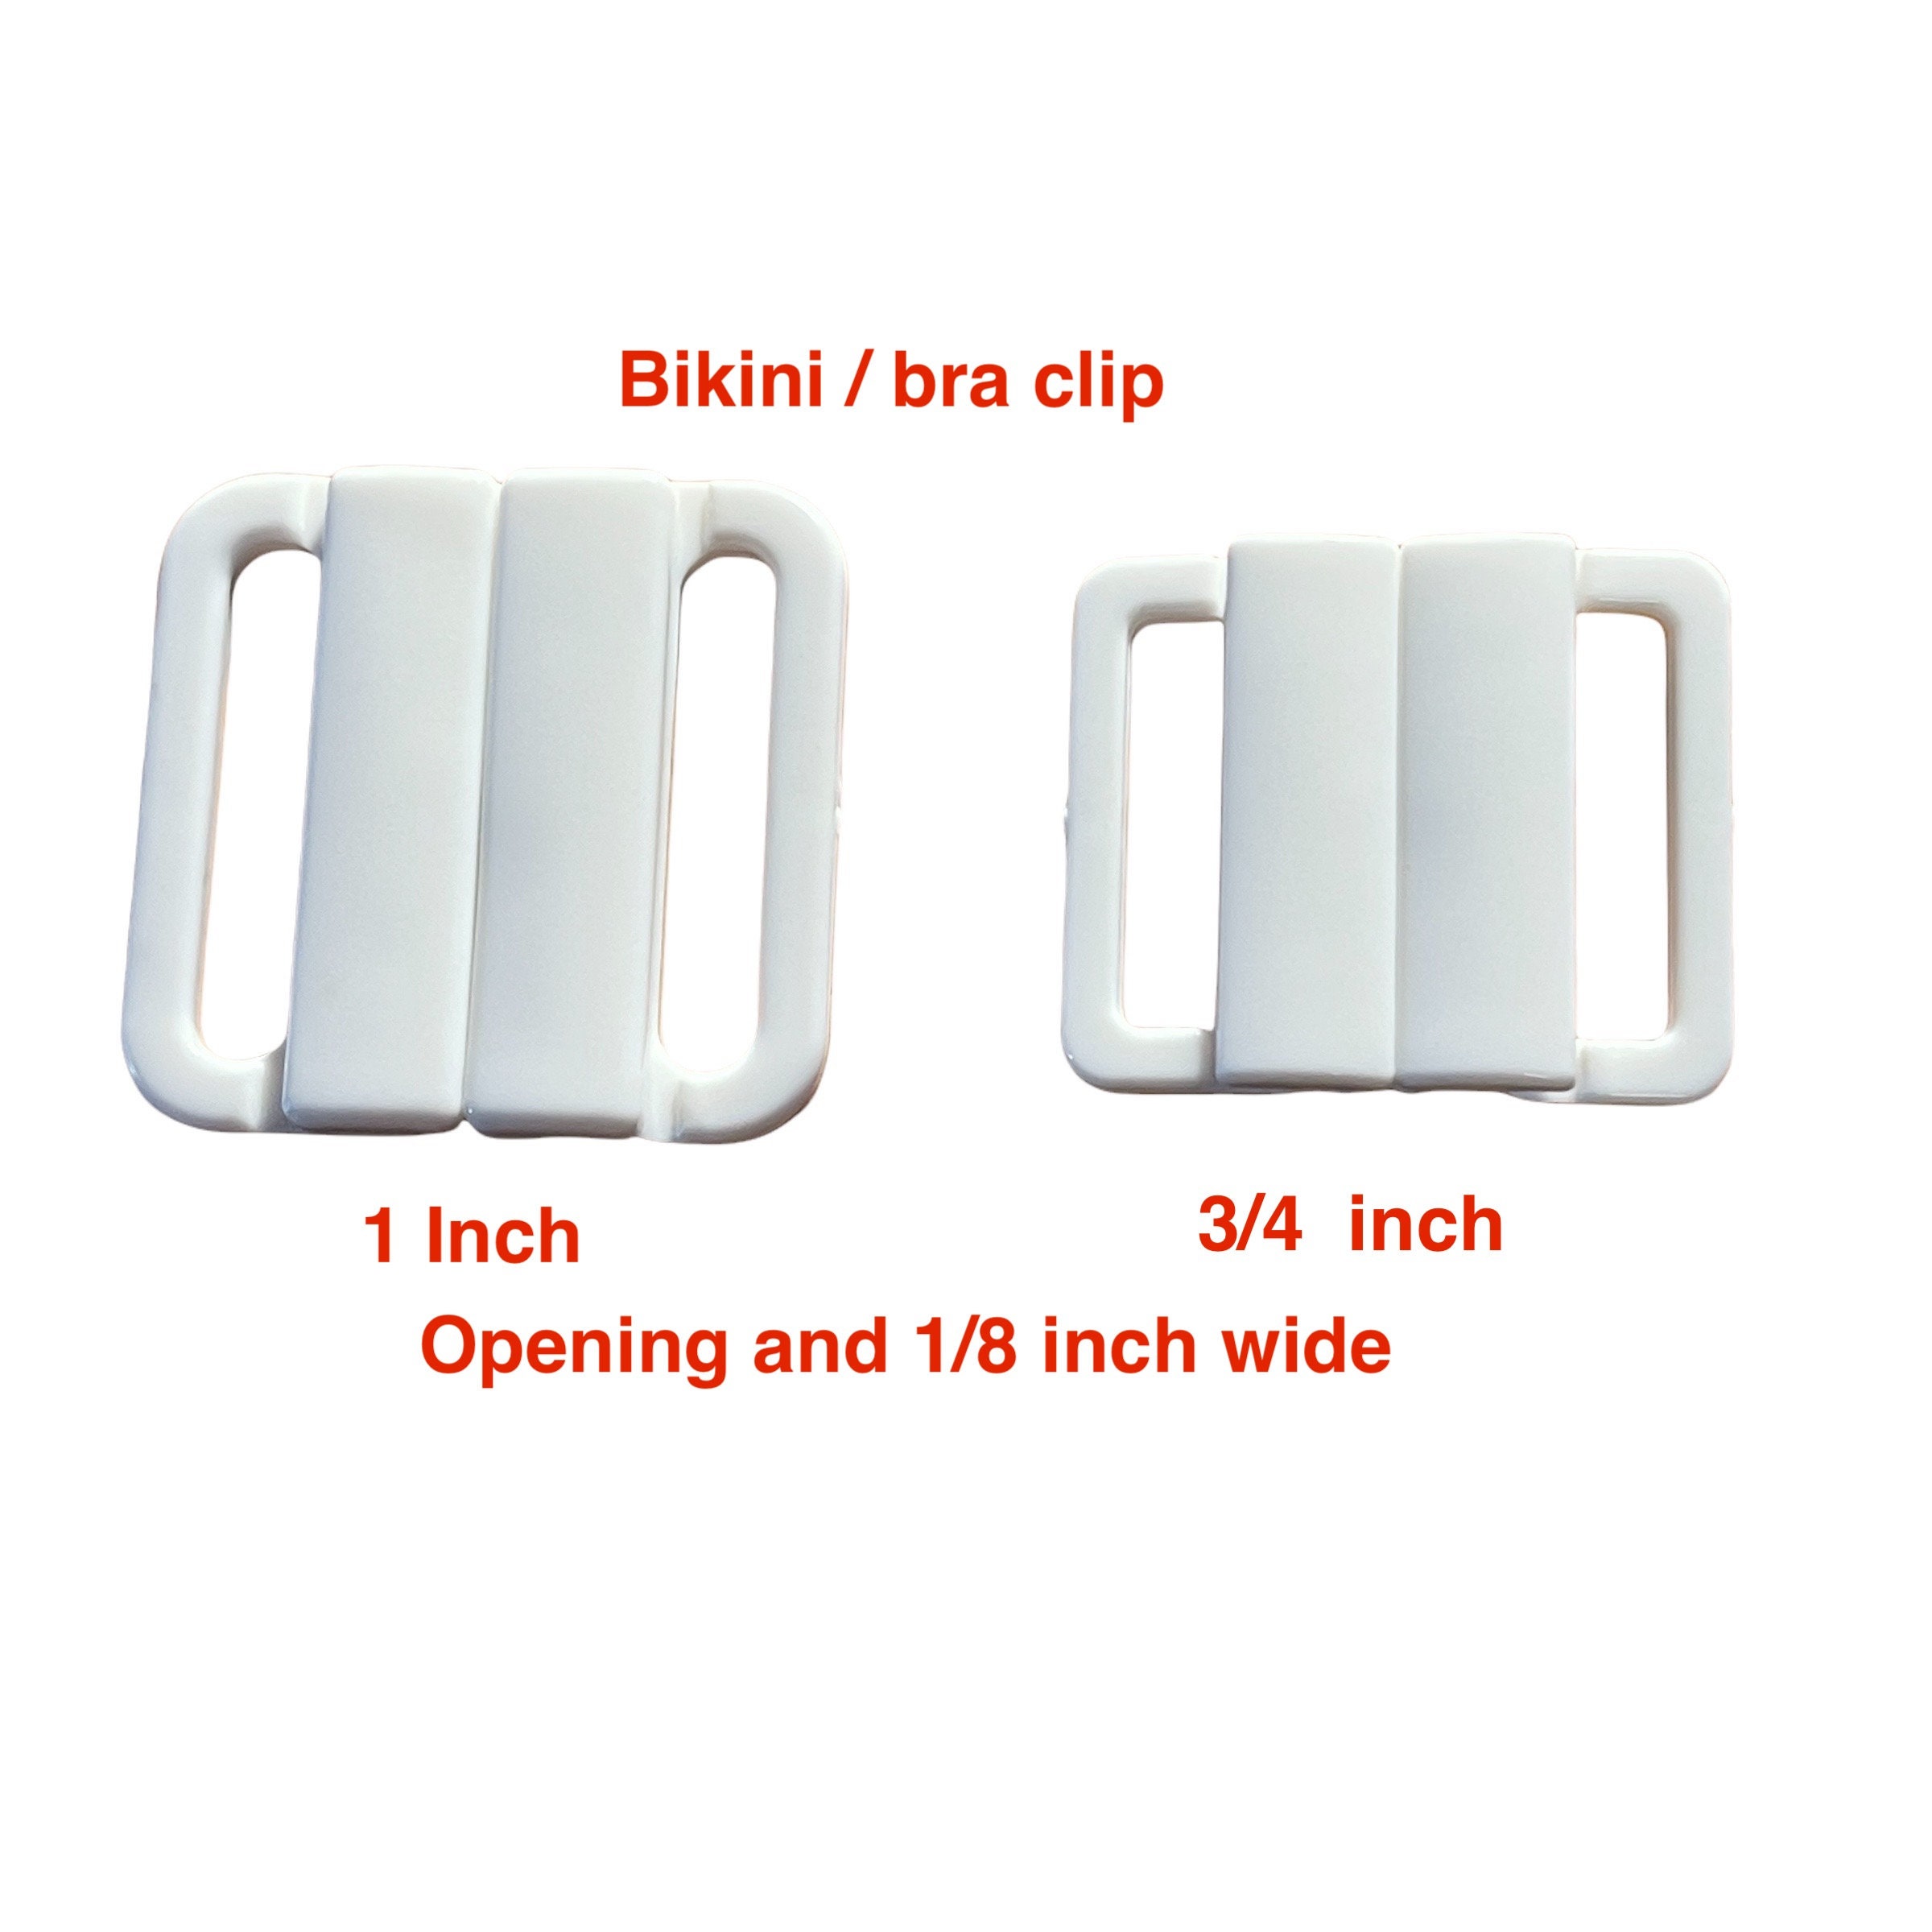 3 Bra Strap Clip to Adjust Straps Bra / Adjustable Straps, Buckle